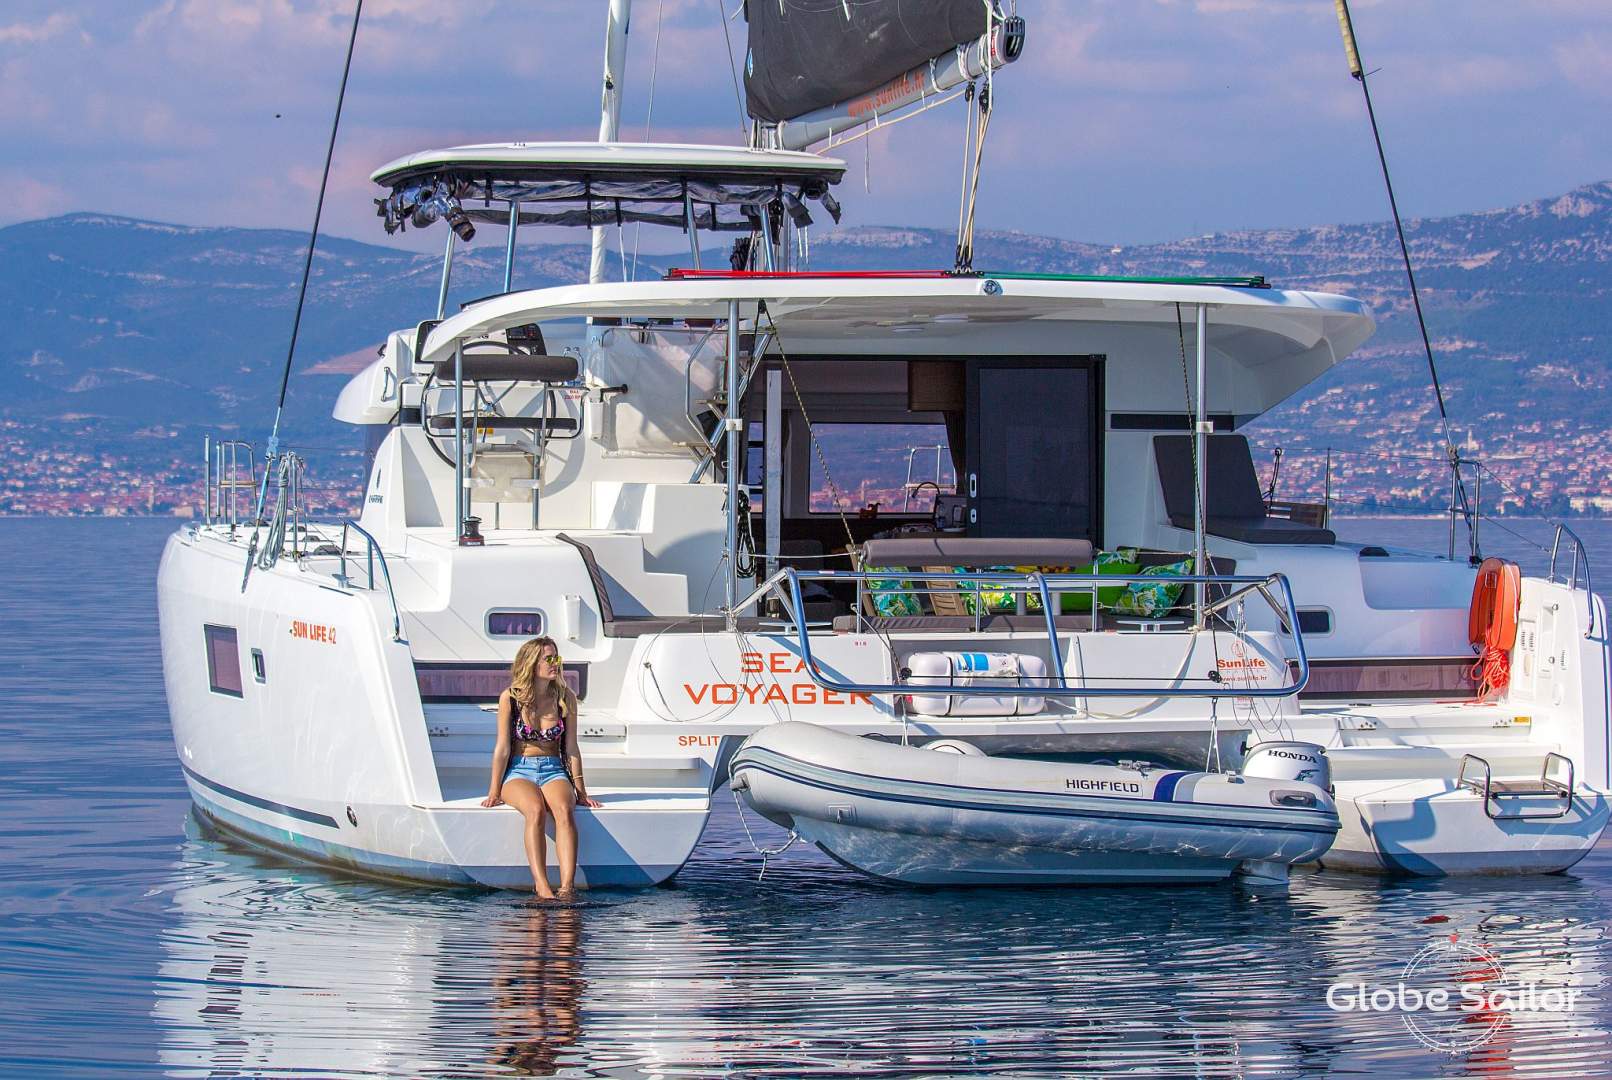 Ready to dive into the Adriatic Sea?